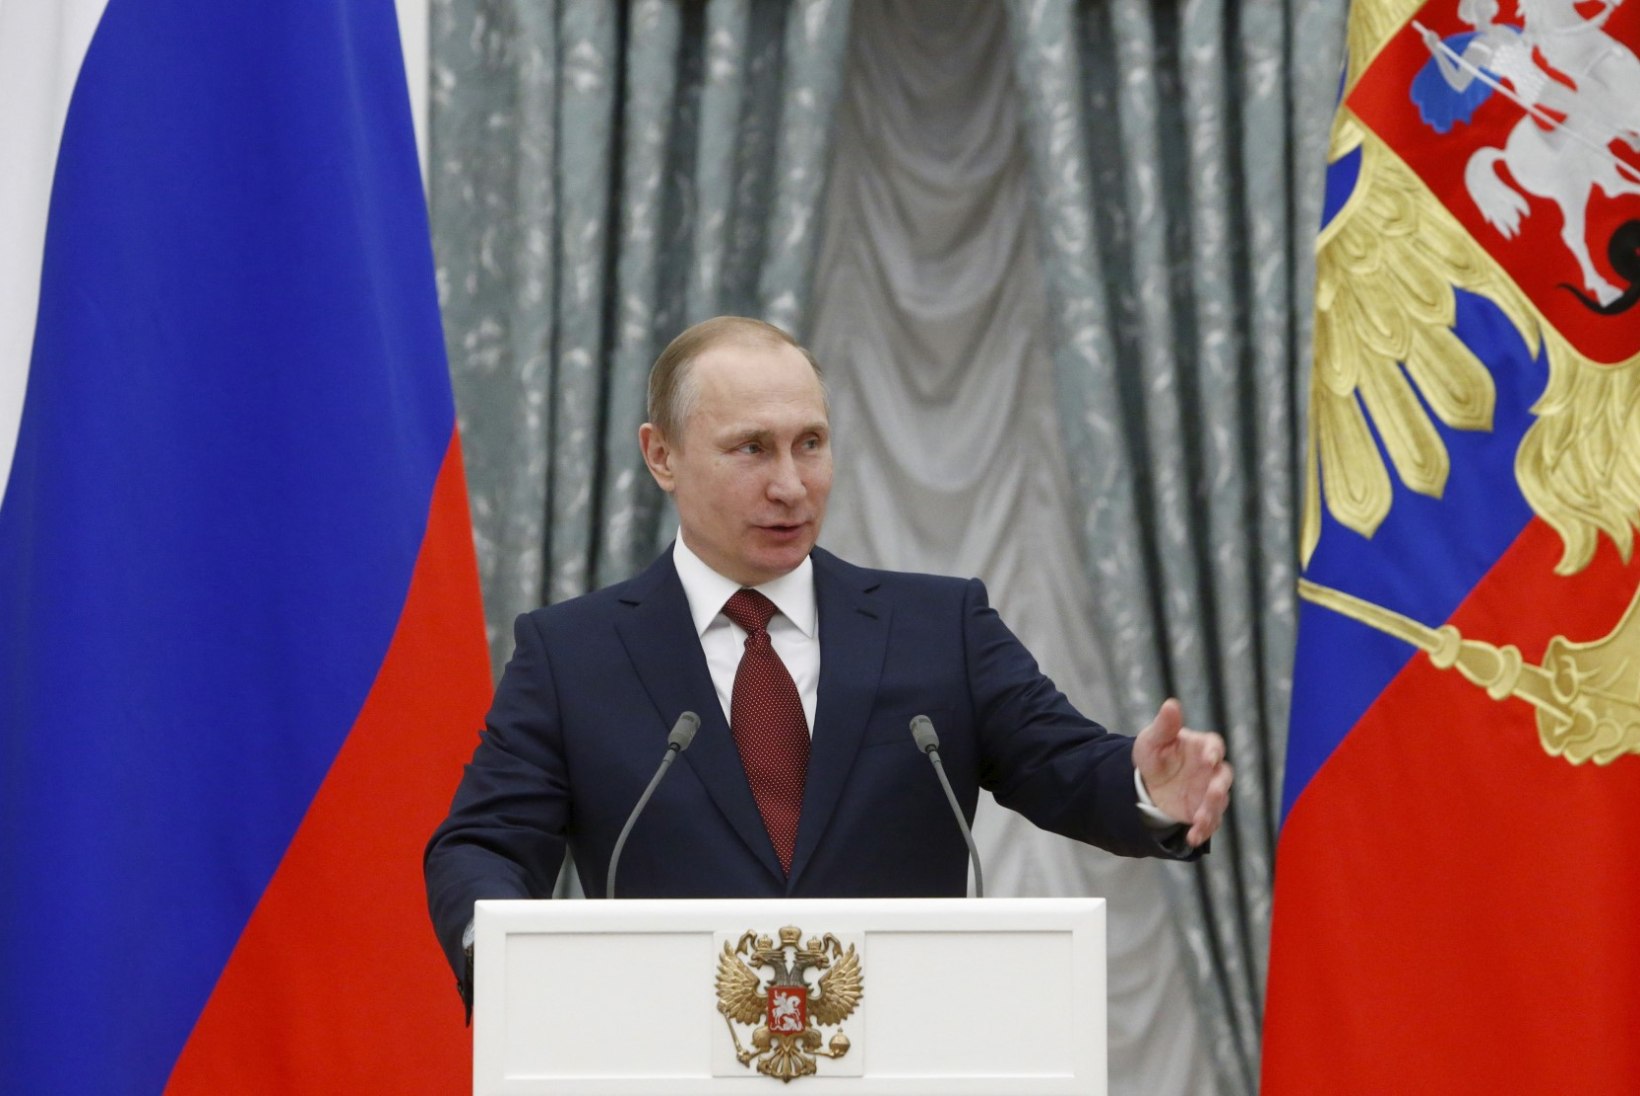 FOTO | Karu seljas kappava Putiniga tehti vahva vormelinali